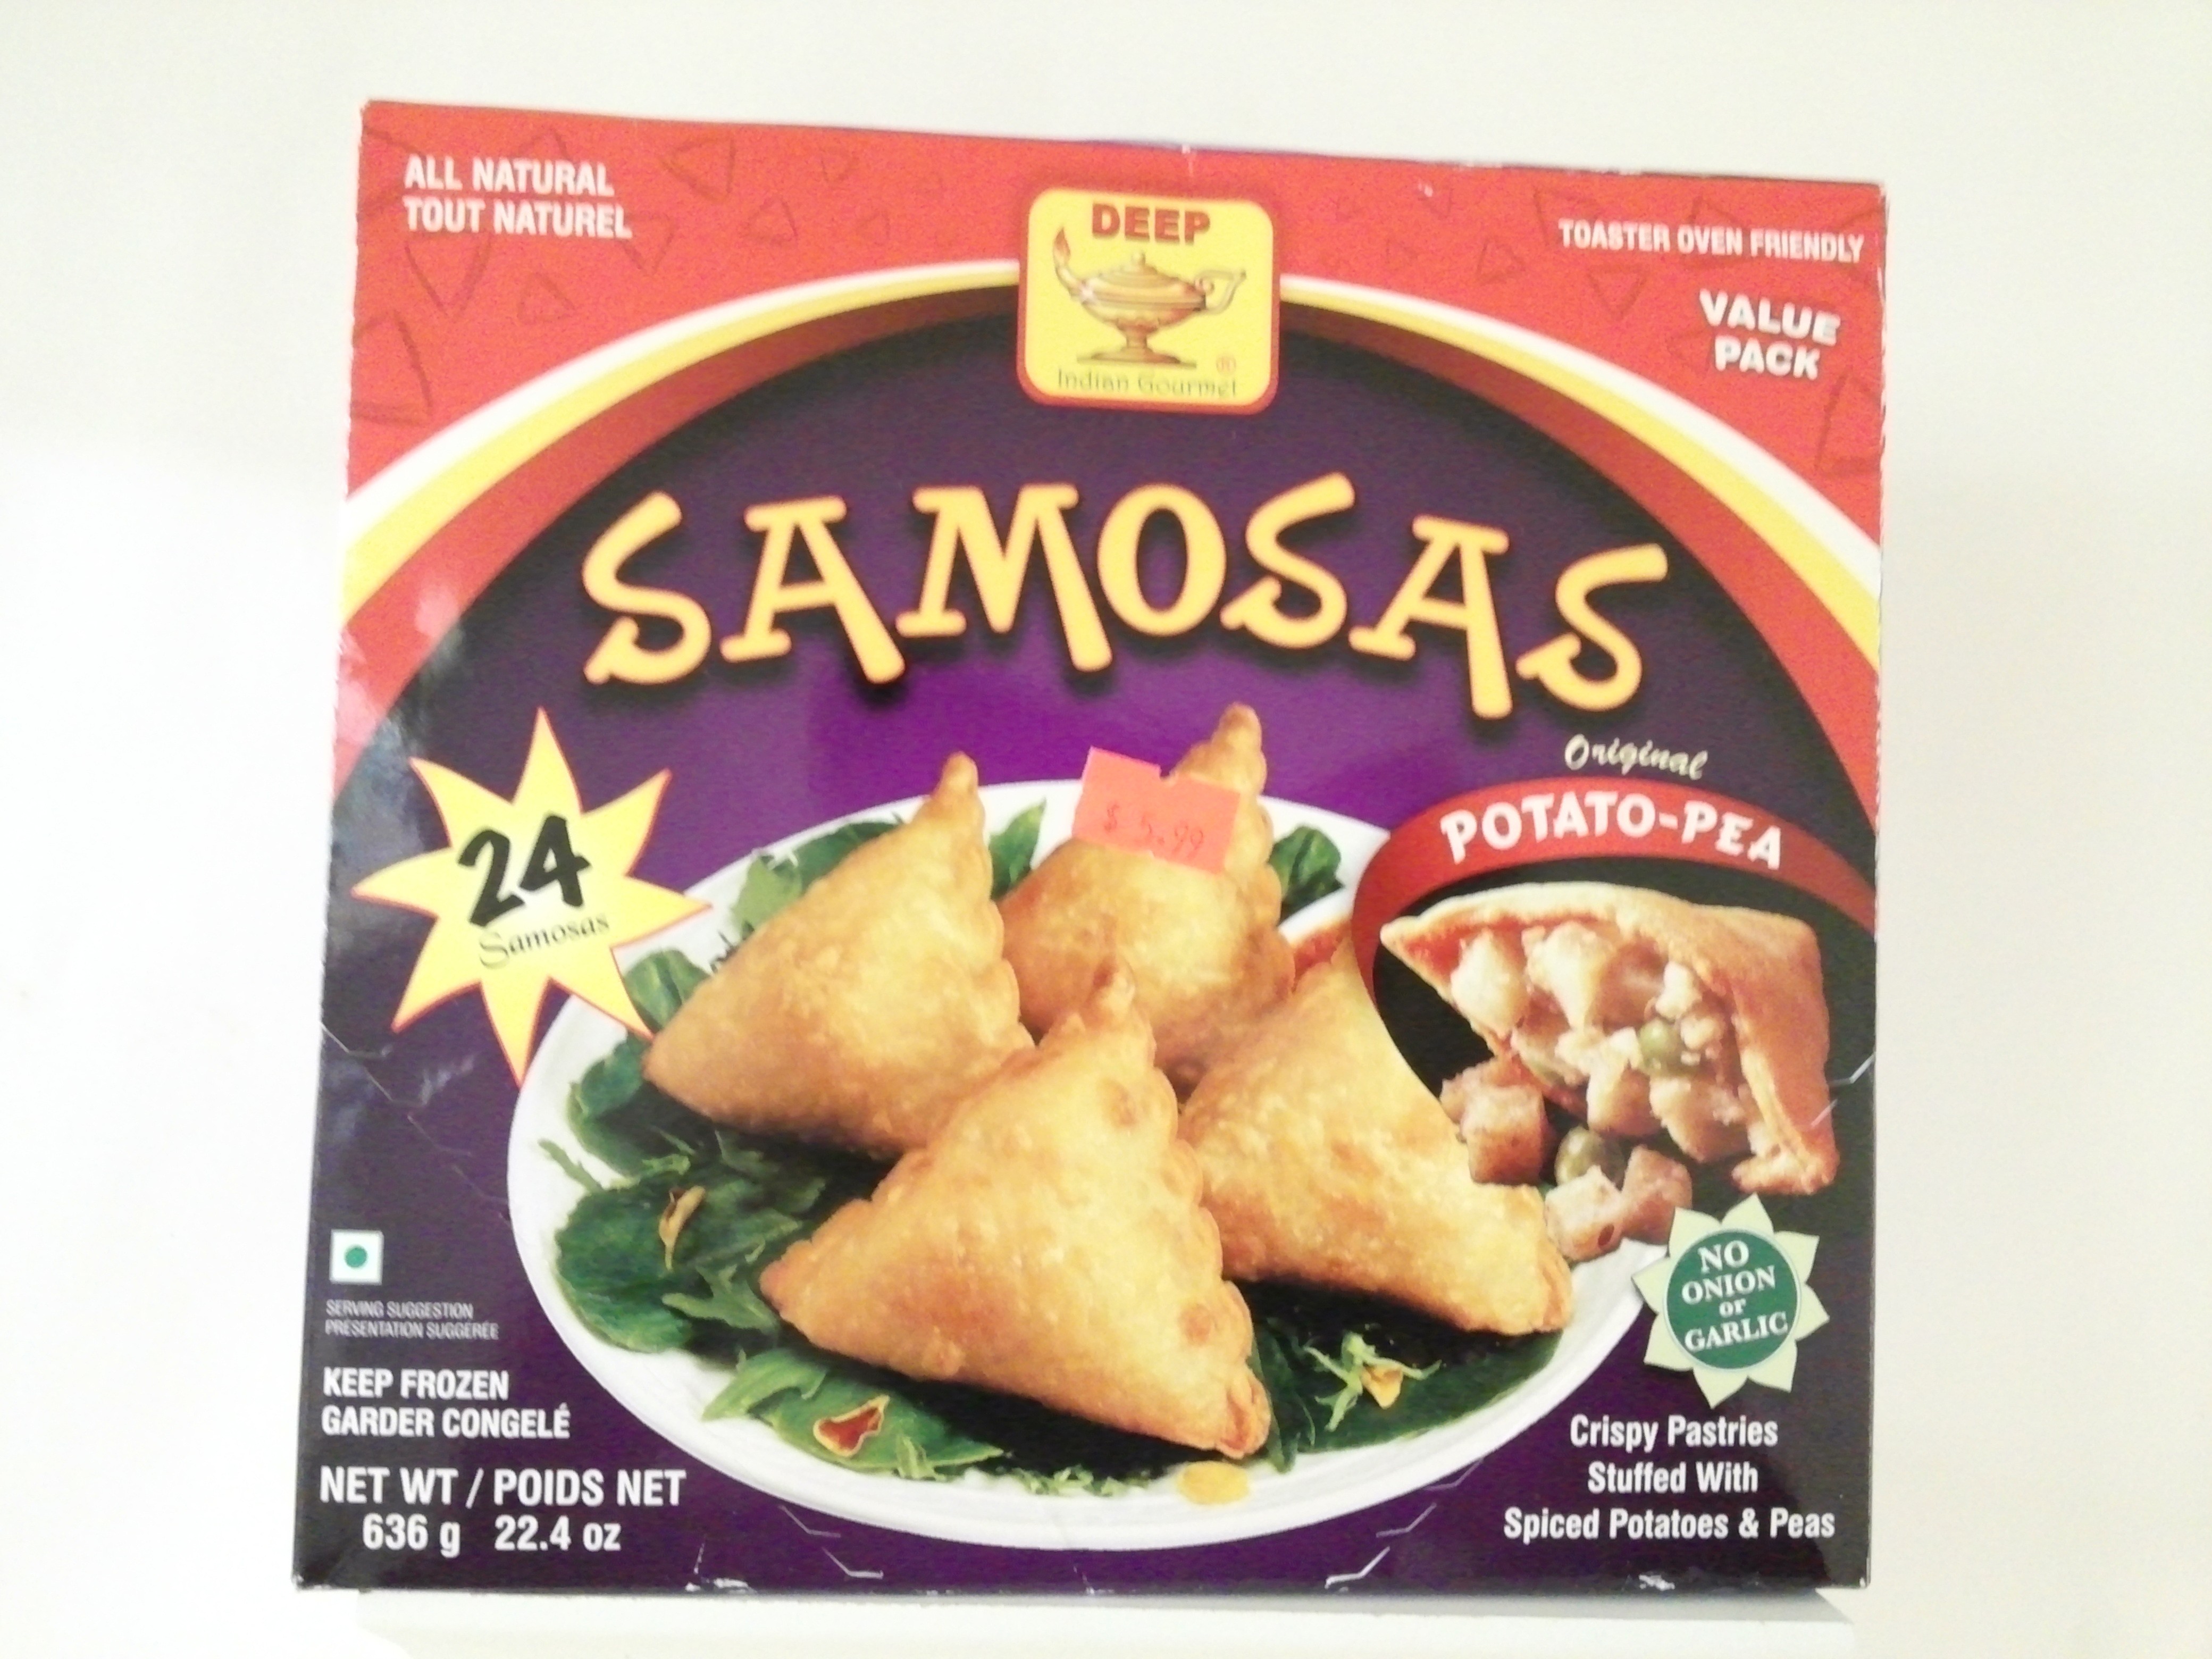 Deep Samosas Potato-Pea 24 pcs 22.4 oz